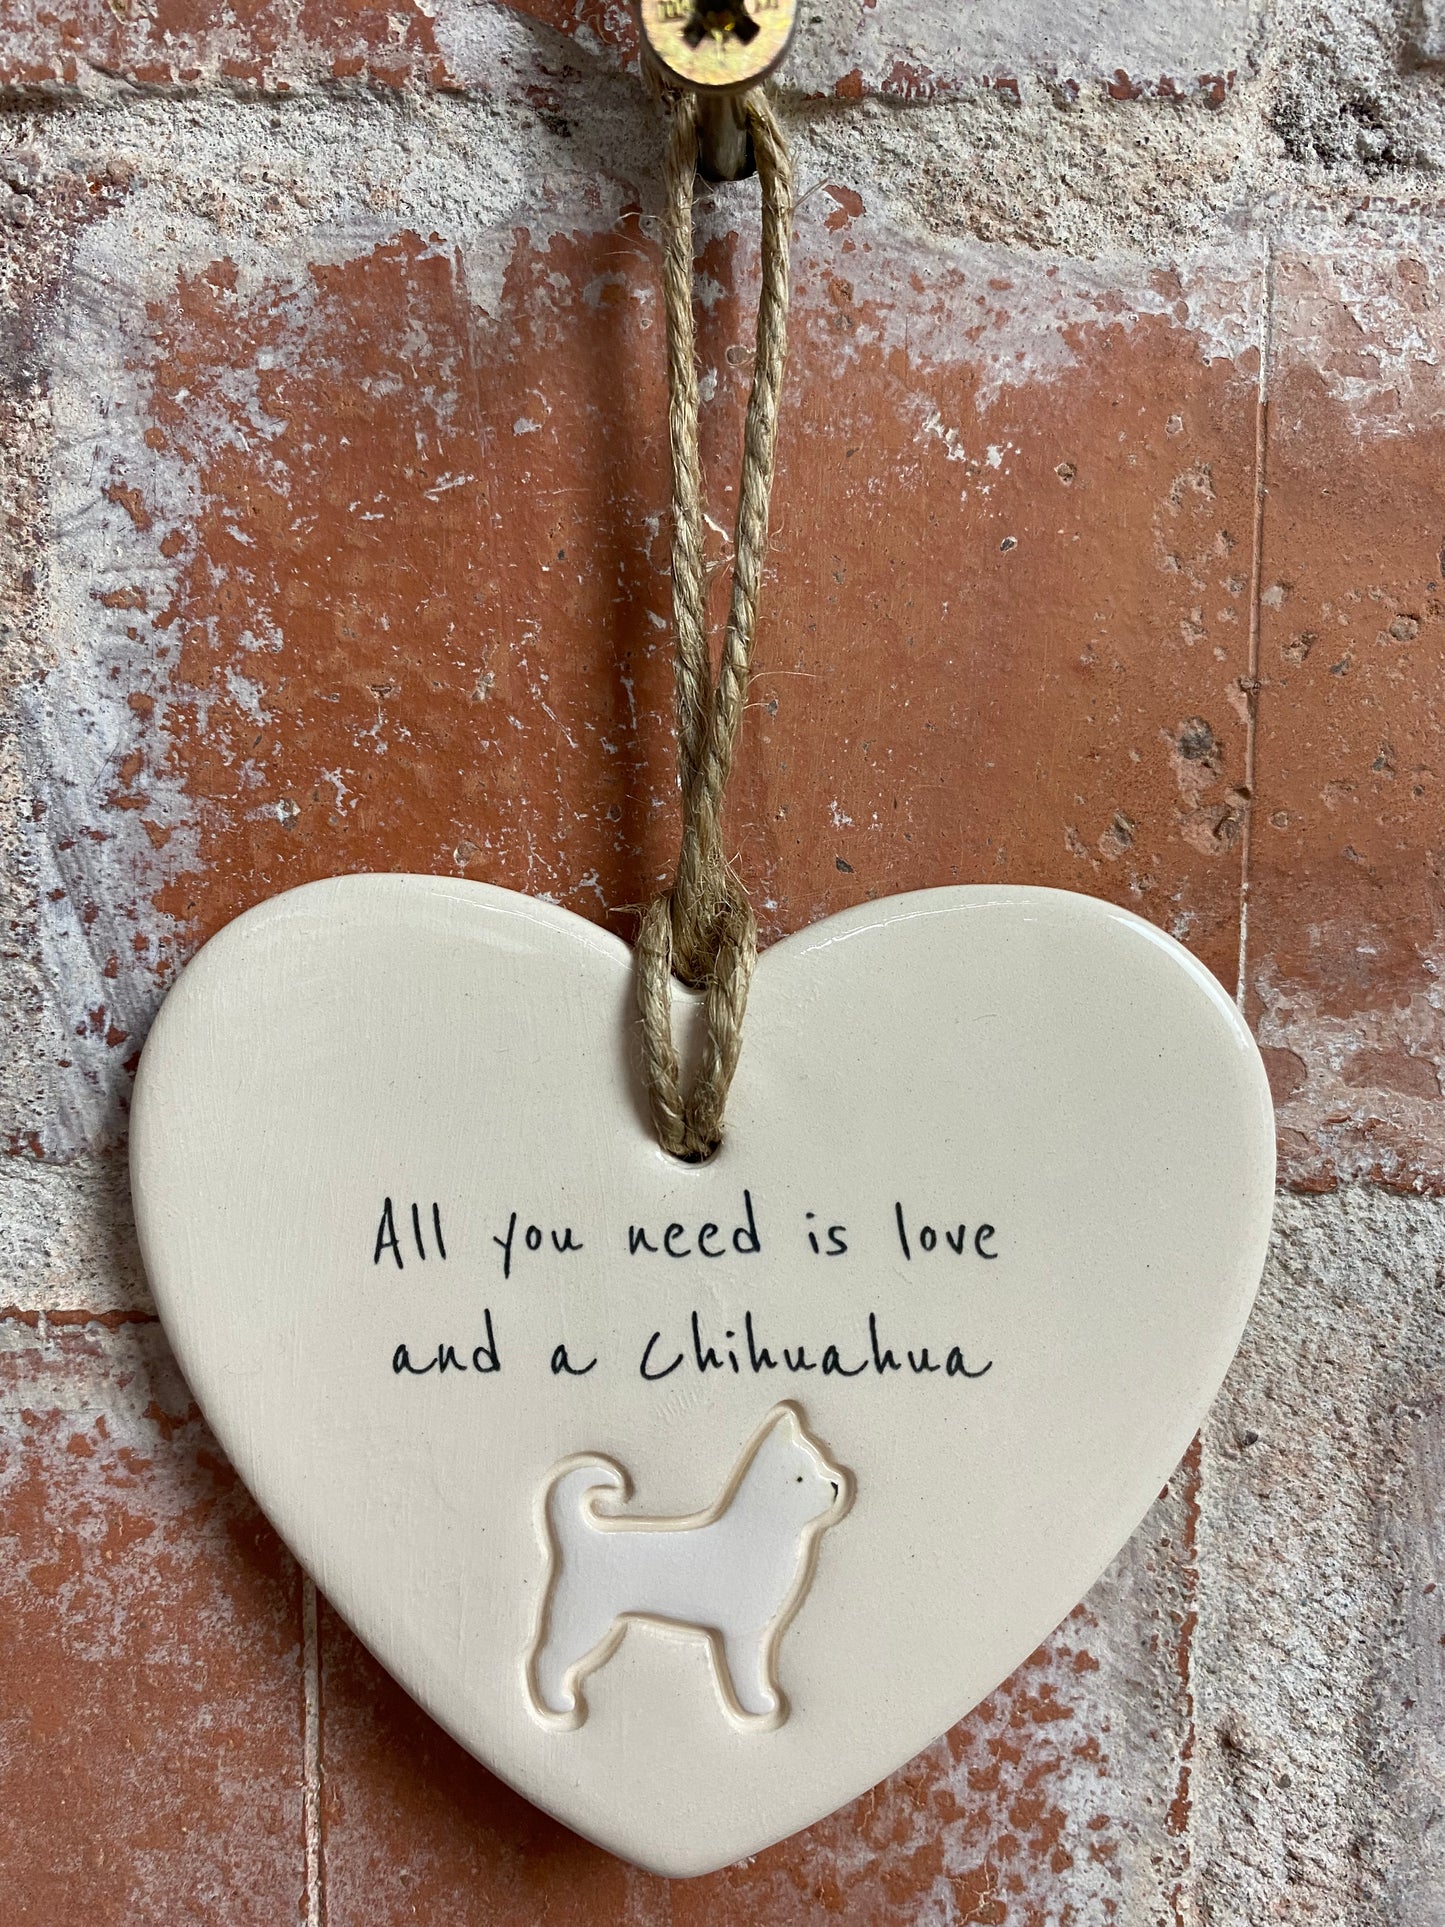 Chihuahua heart